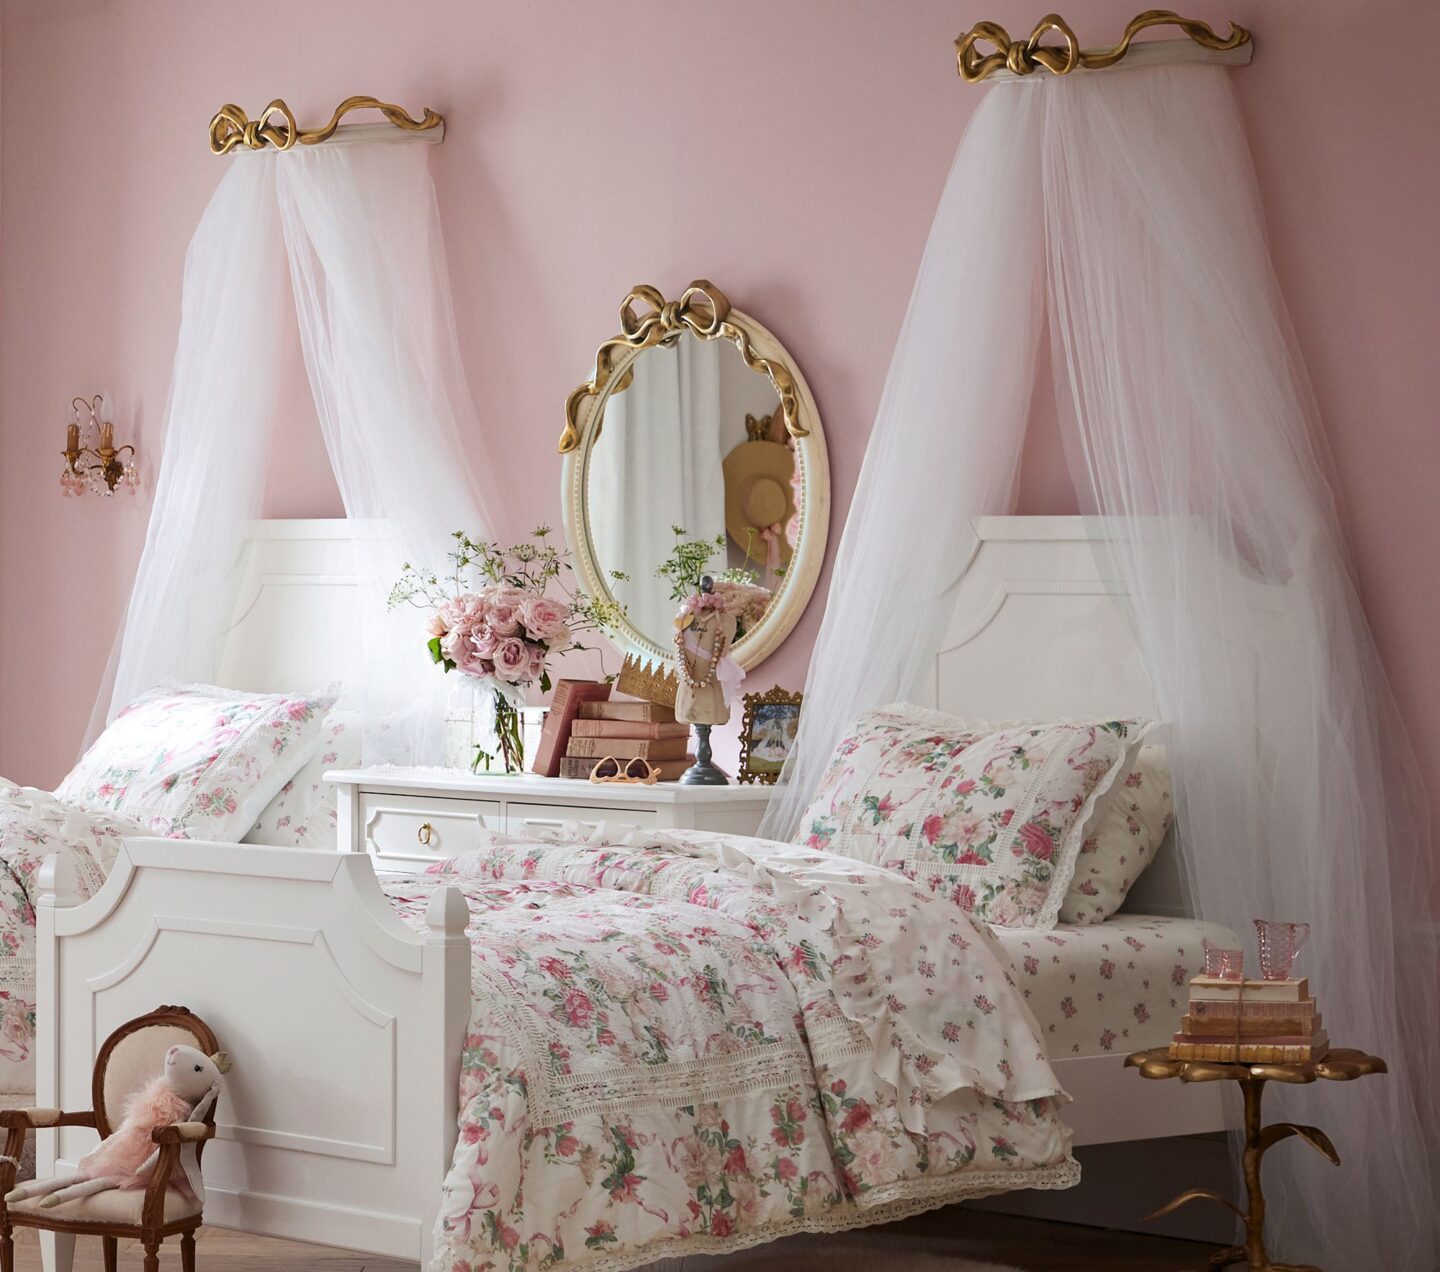 English country rose bedroom, girls bedroom, Cottage core aesthetic, Bridgerton decor vibes, Chintz bedroom, baby girl nursery, 